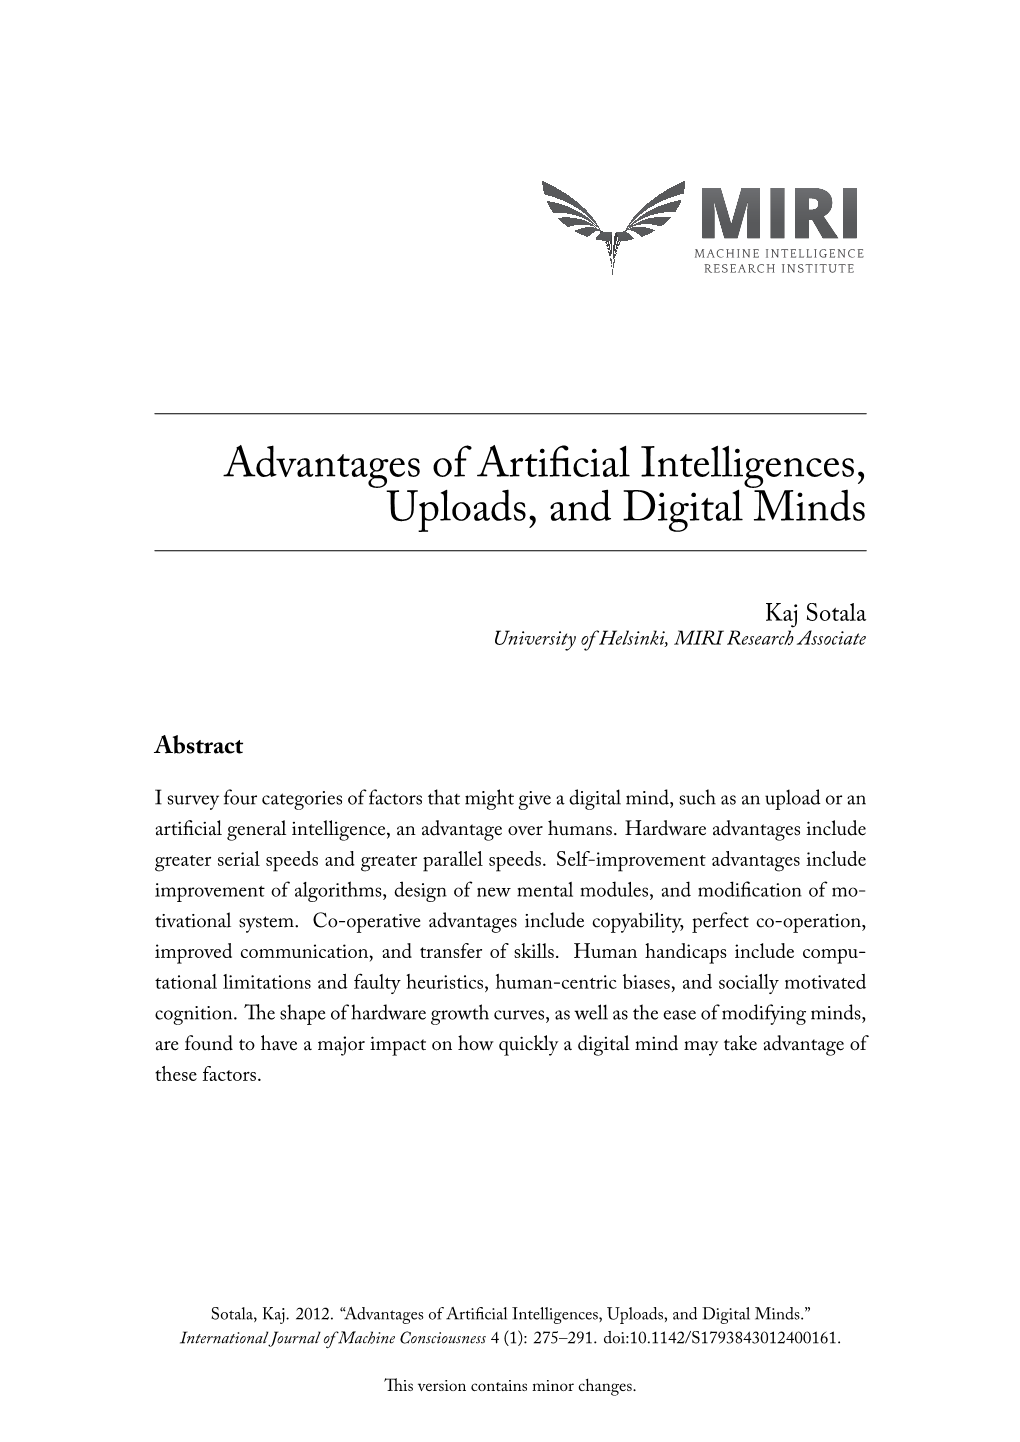 Advantages of Artificial Intelligences, Uploads, and Digital Minds